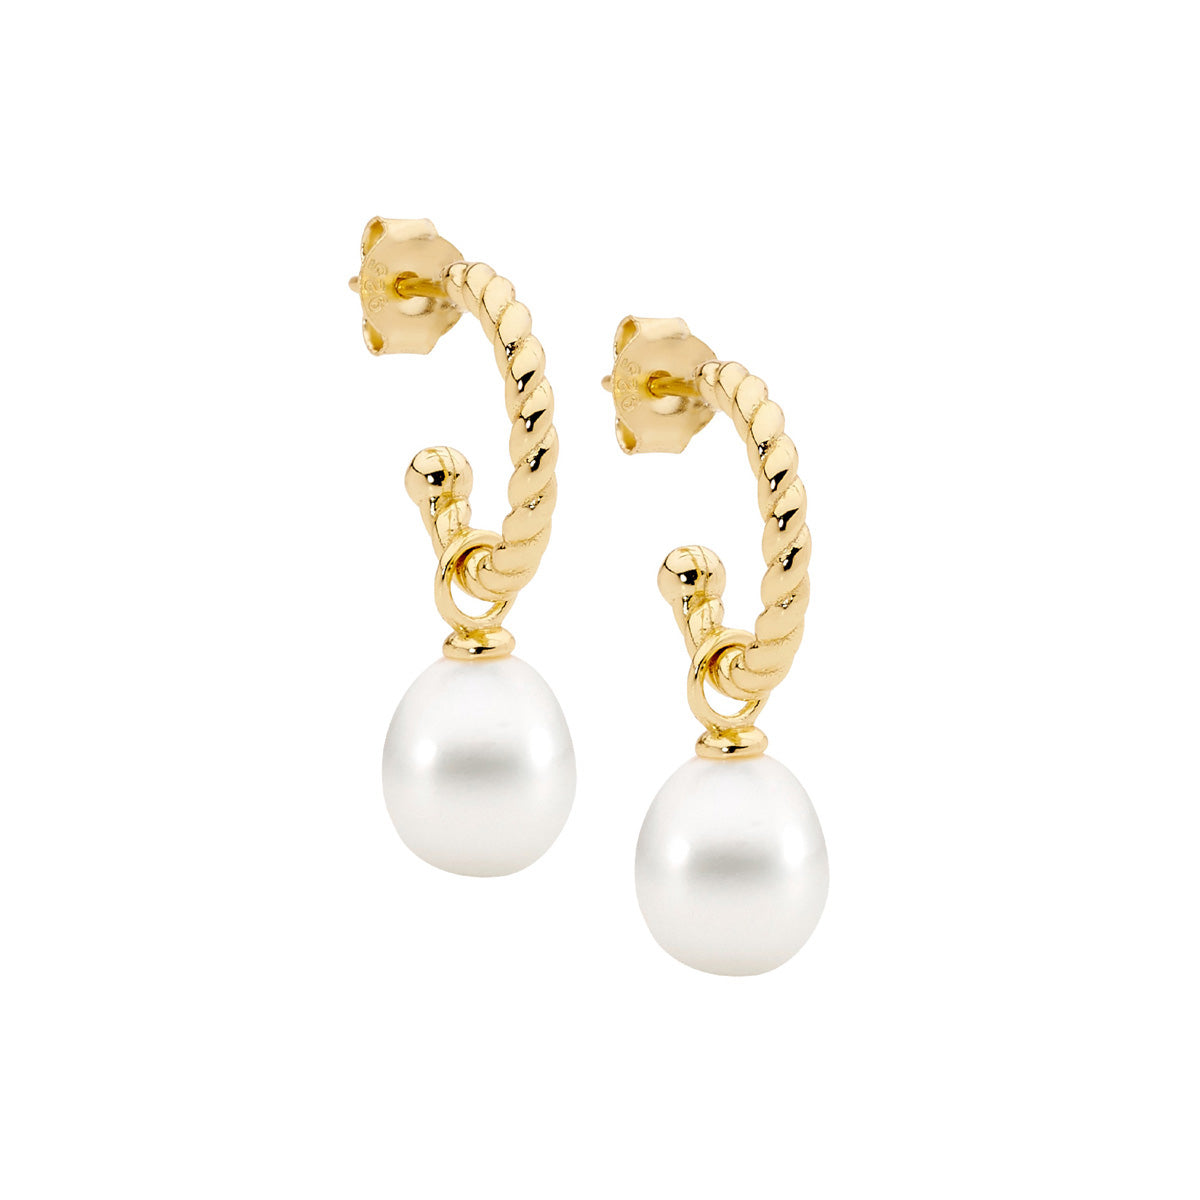 Sterling Silver Twist Hoop Gold Plated Earrings with Pearl Drop